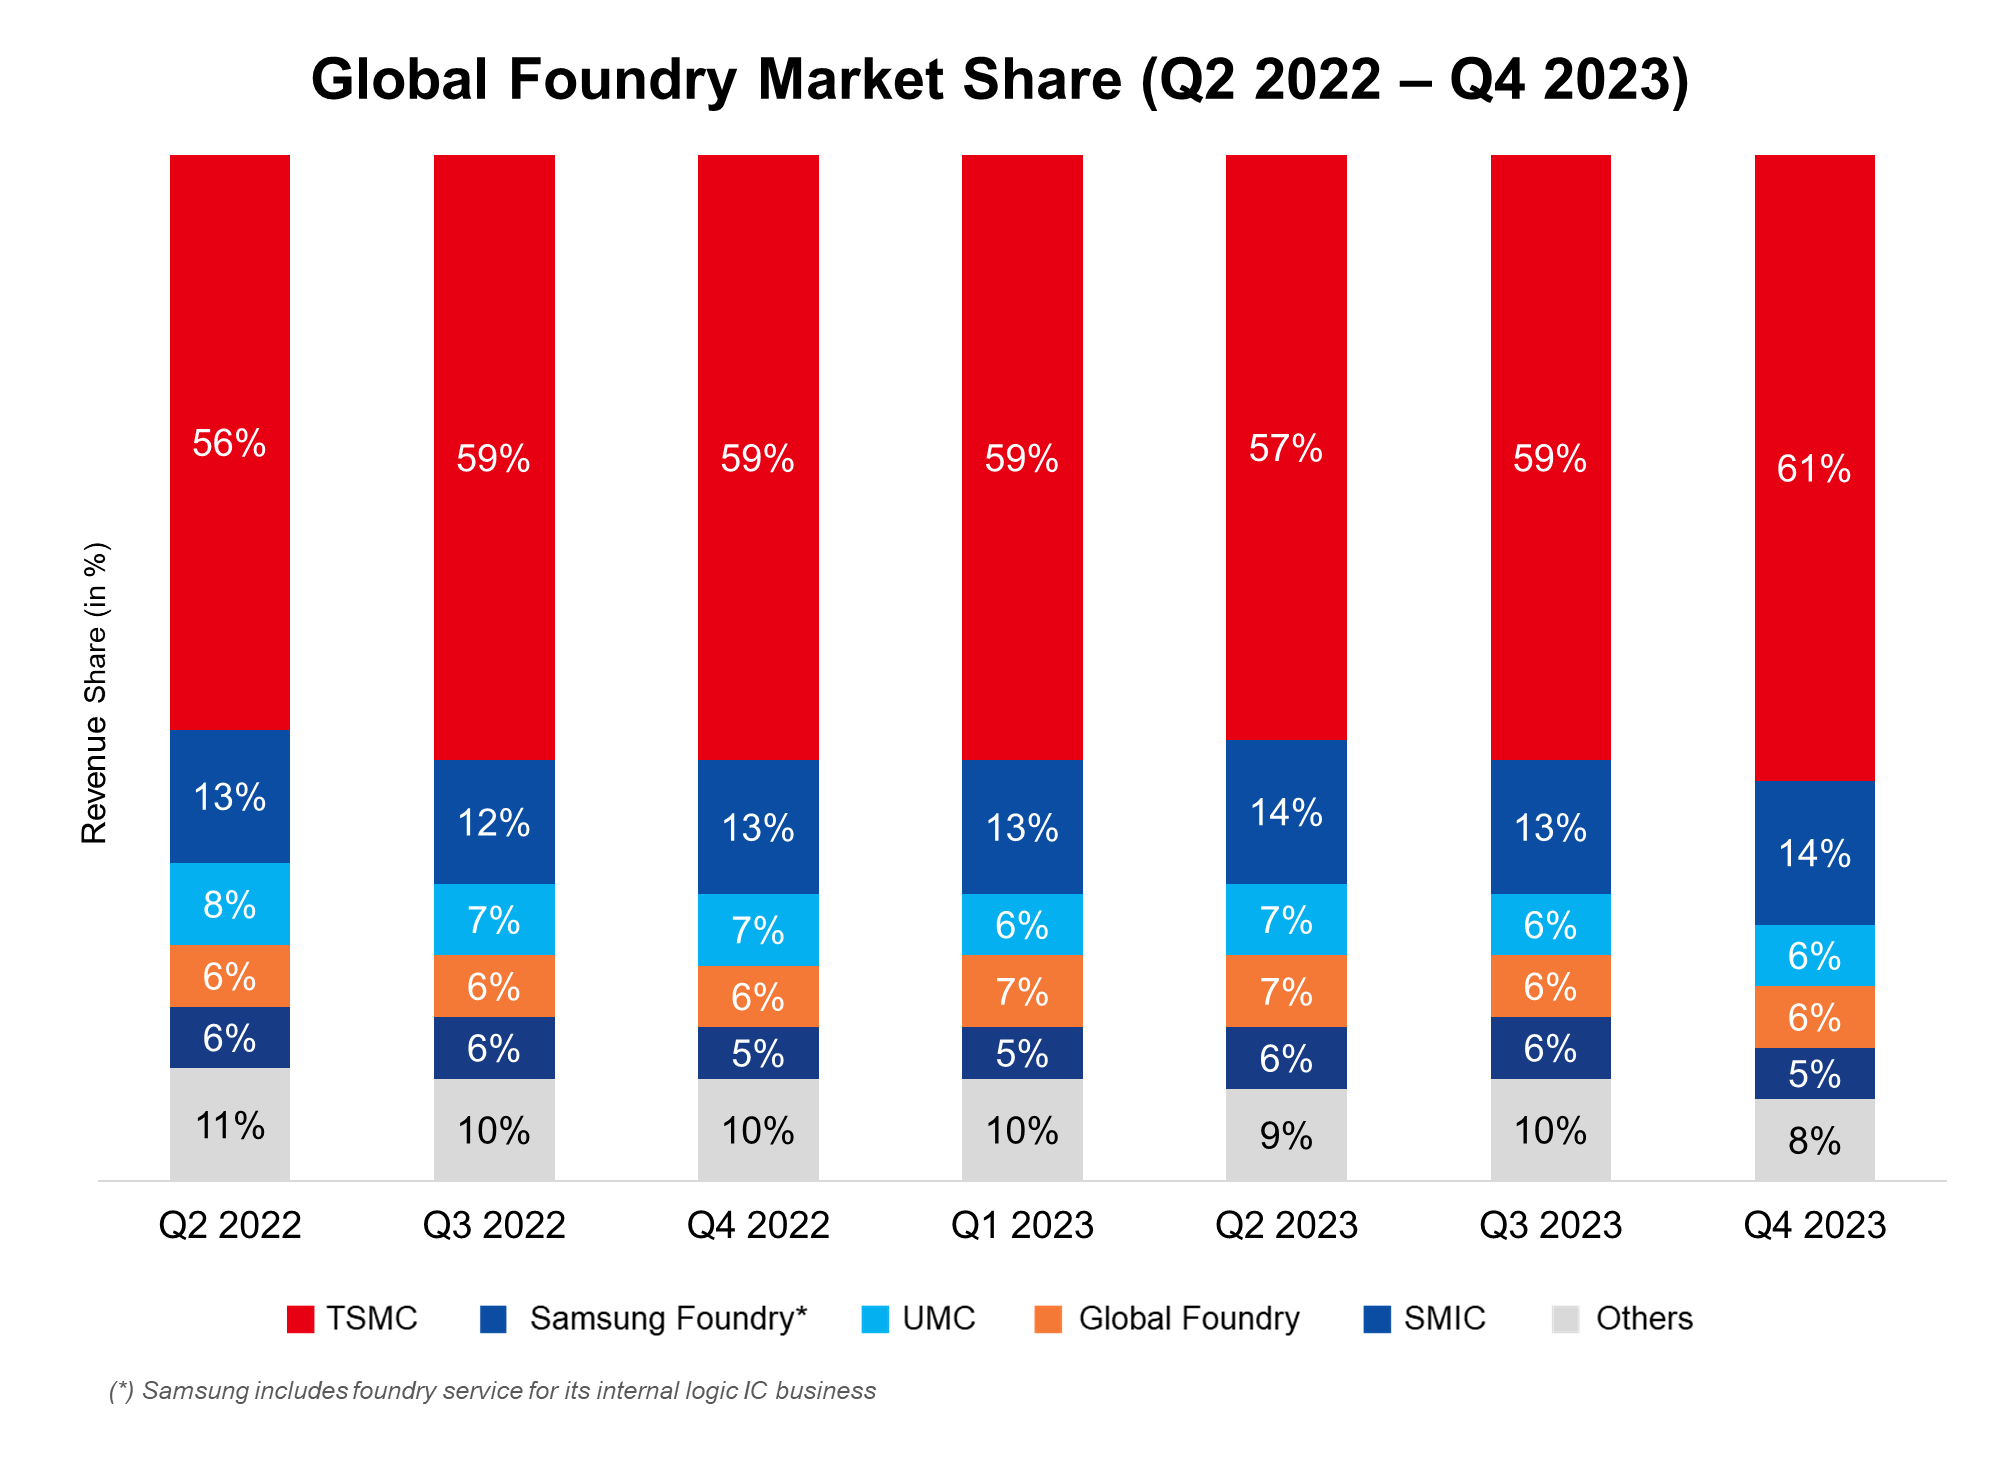 Global Foundry Companies Revenue Share Q4 2023